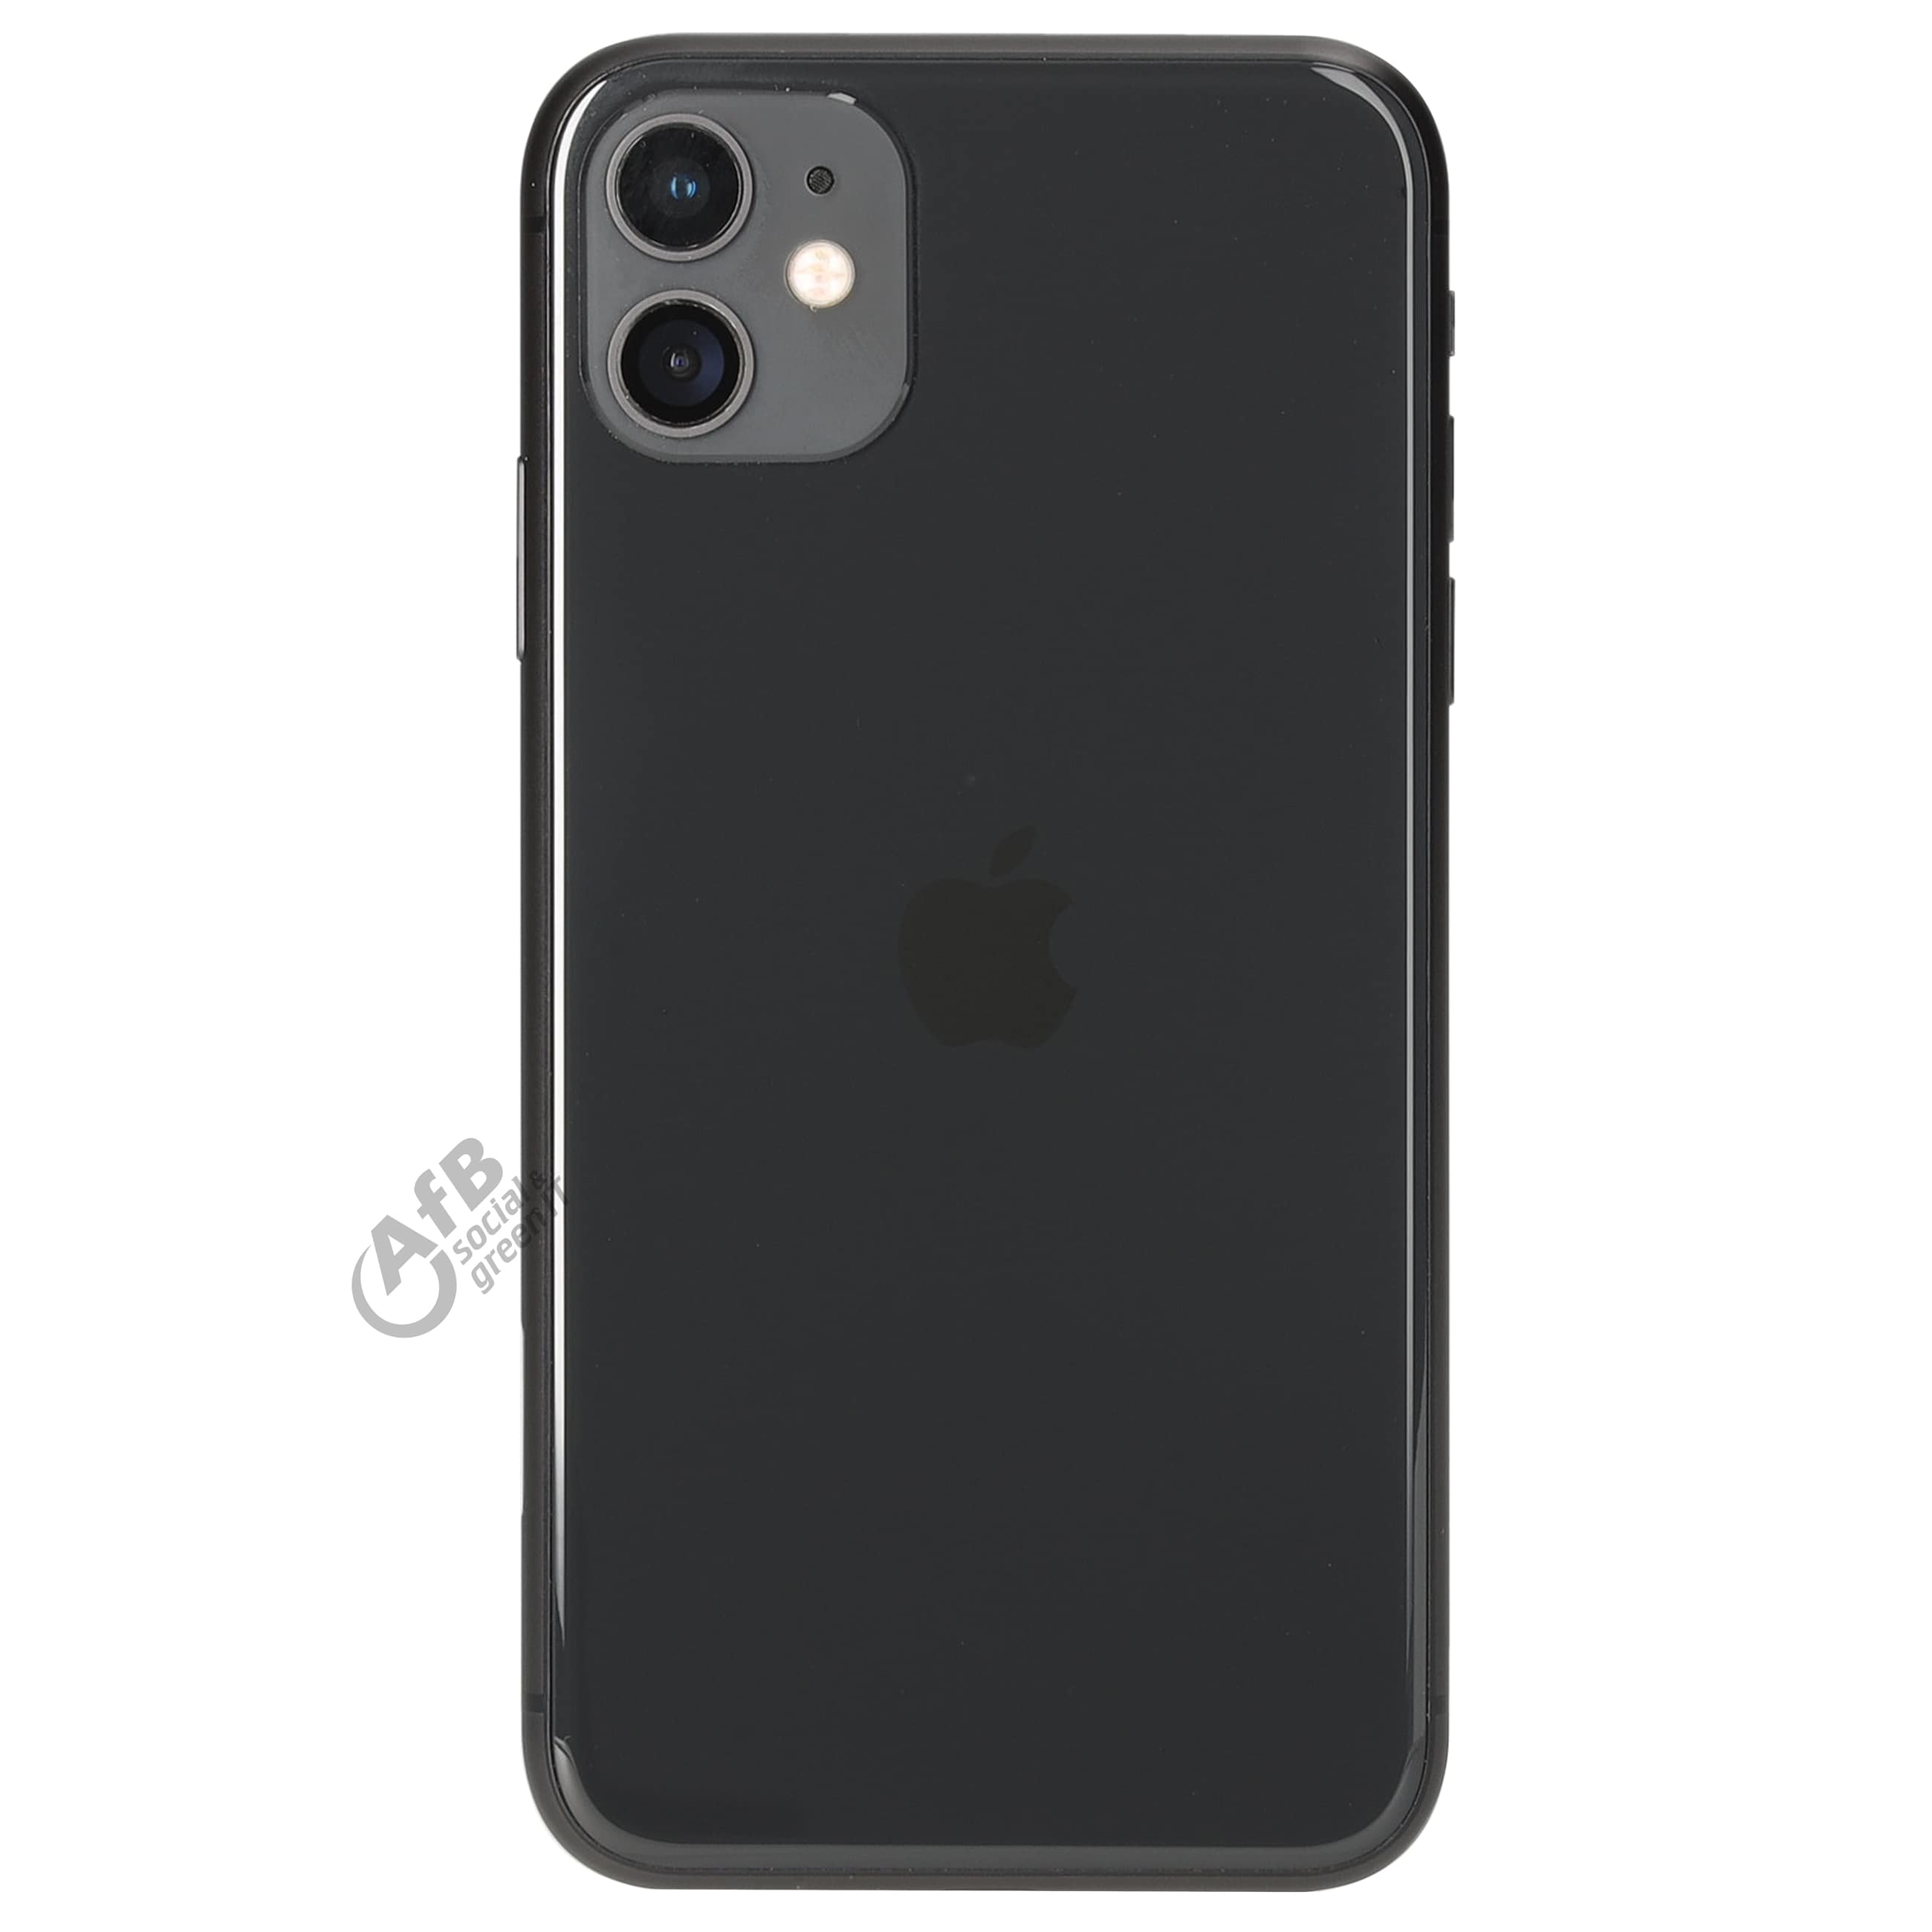 Apple iPhone 11 - 64 GB - Black